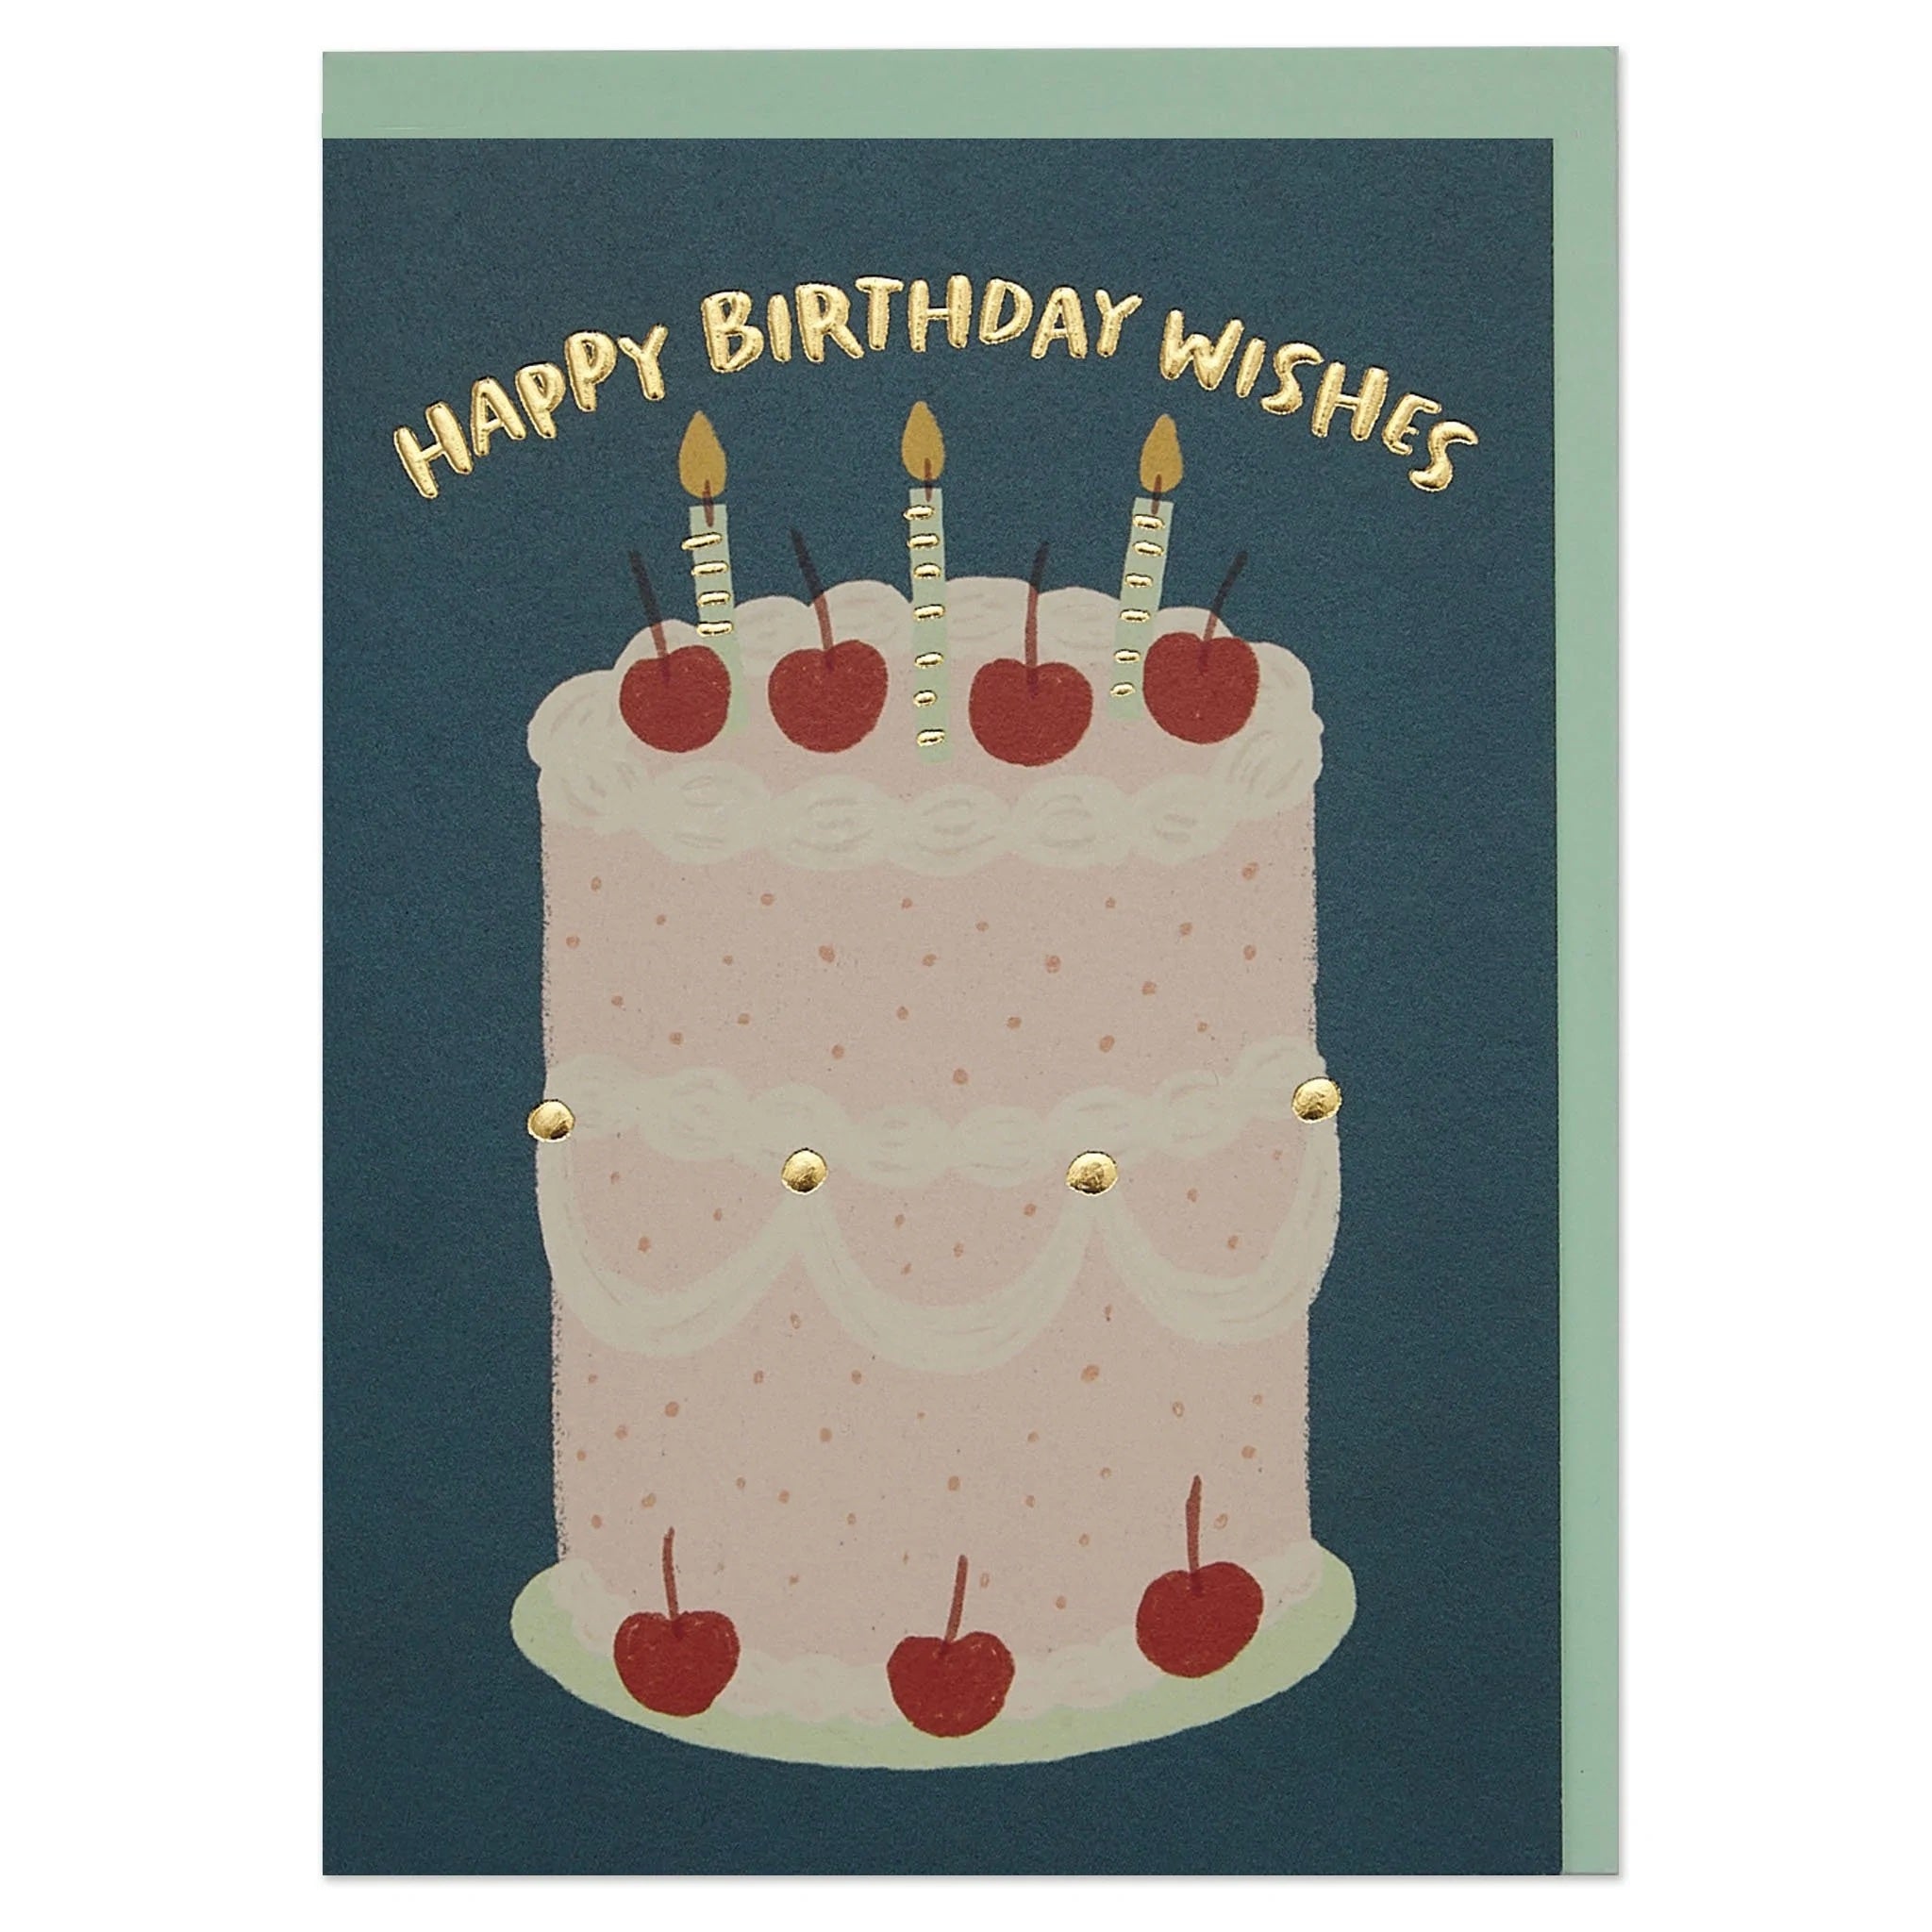 'Happy Birthday wishes' Card by Raspberry Blossom